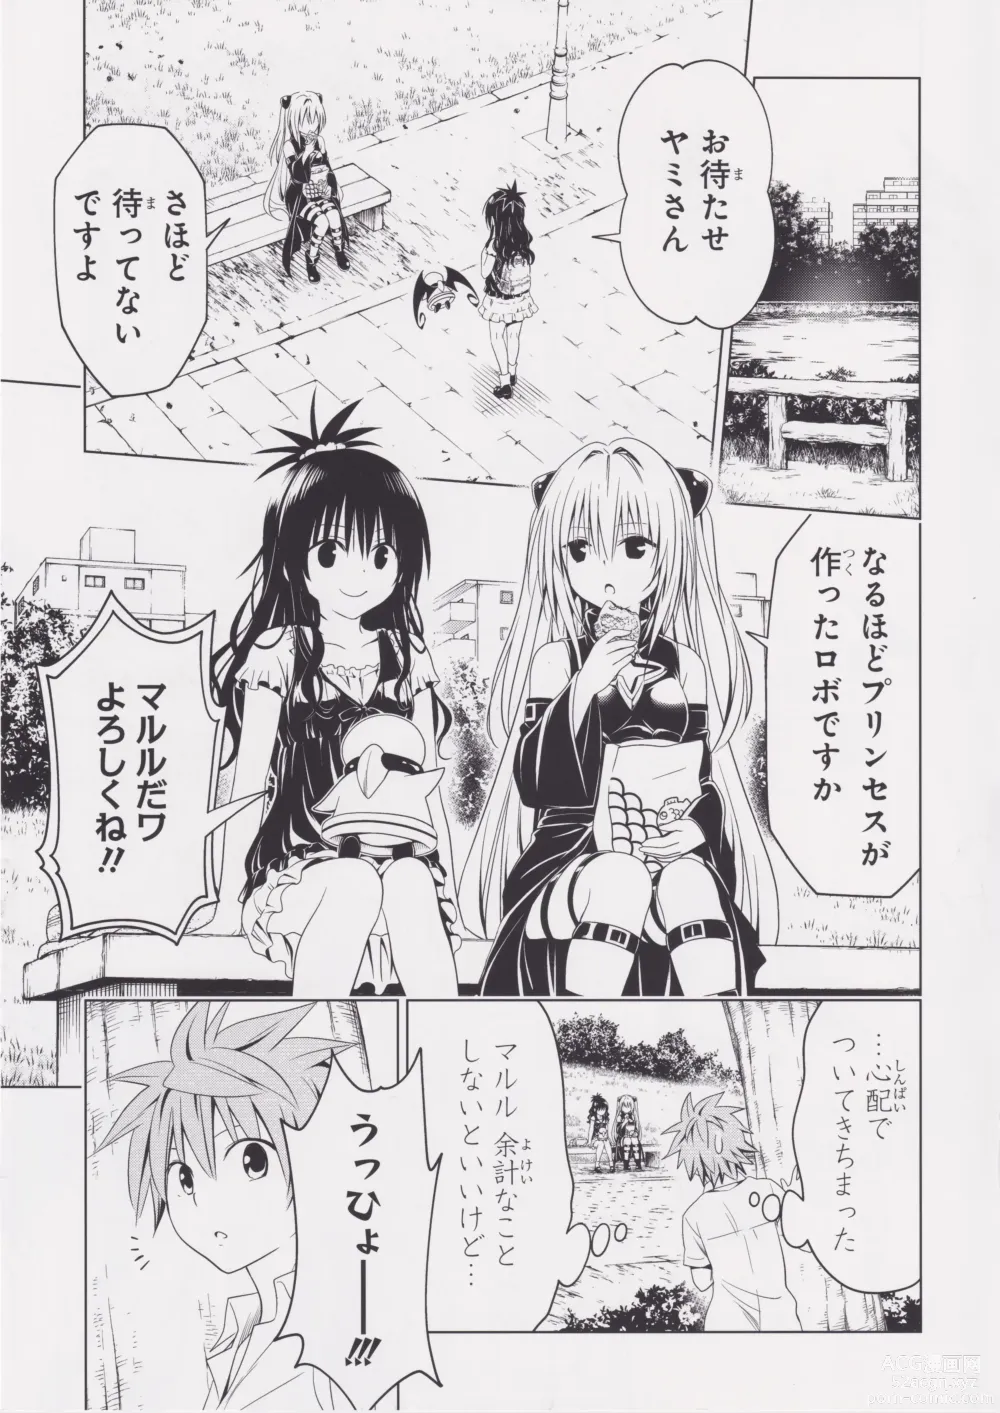 Page 66 of manga Highlight